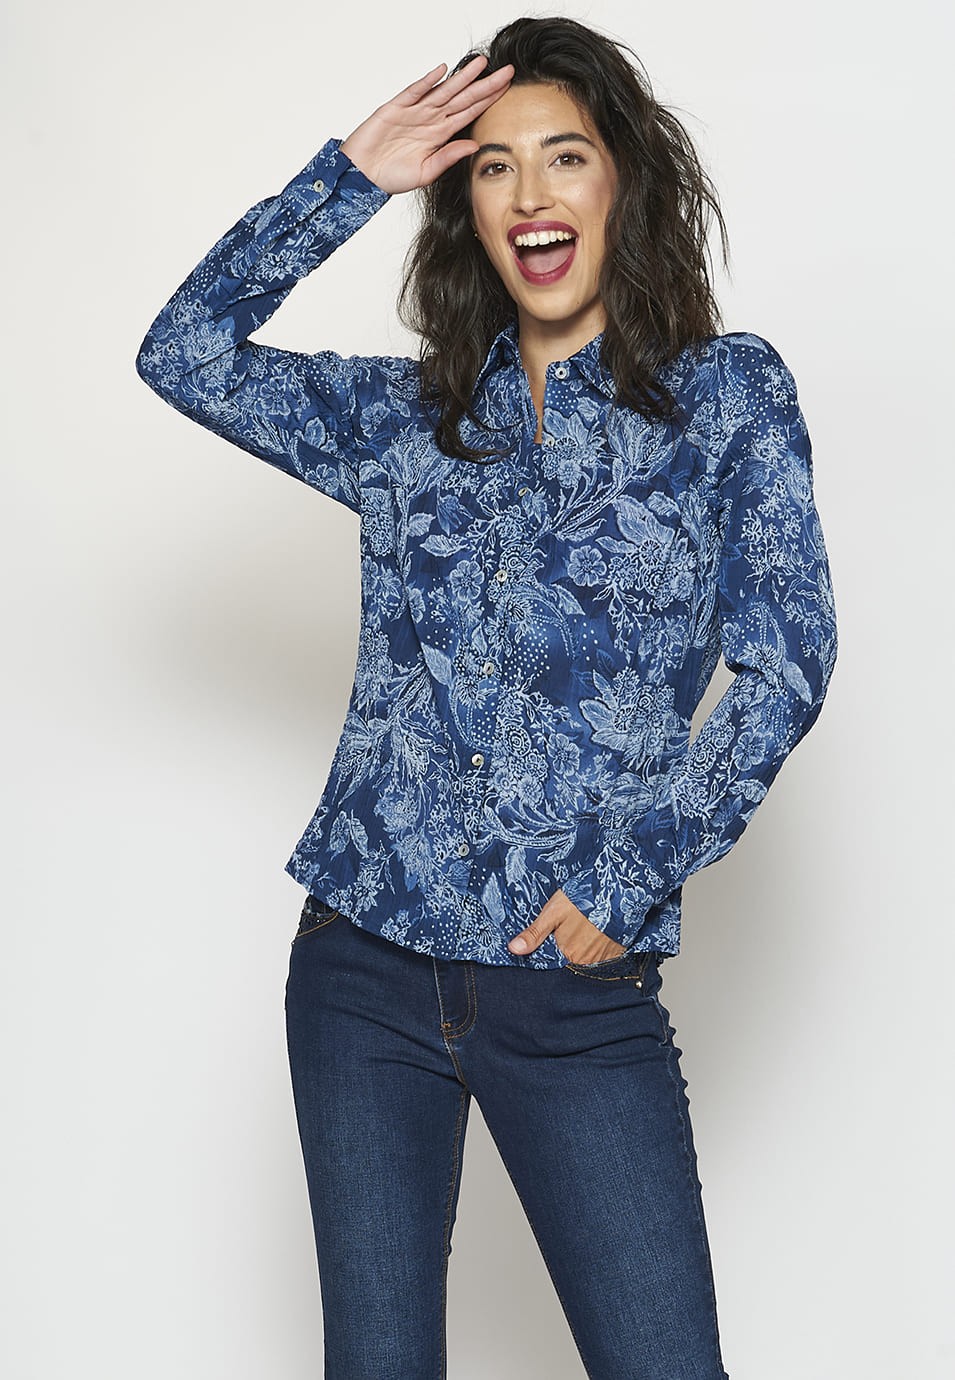 Pase para saber Marca comercial carpintero Camisa Blusa Manga larga azul con estampado floral para Mujer